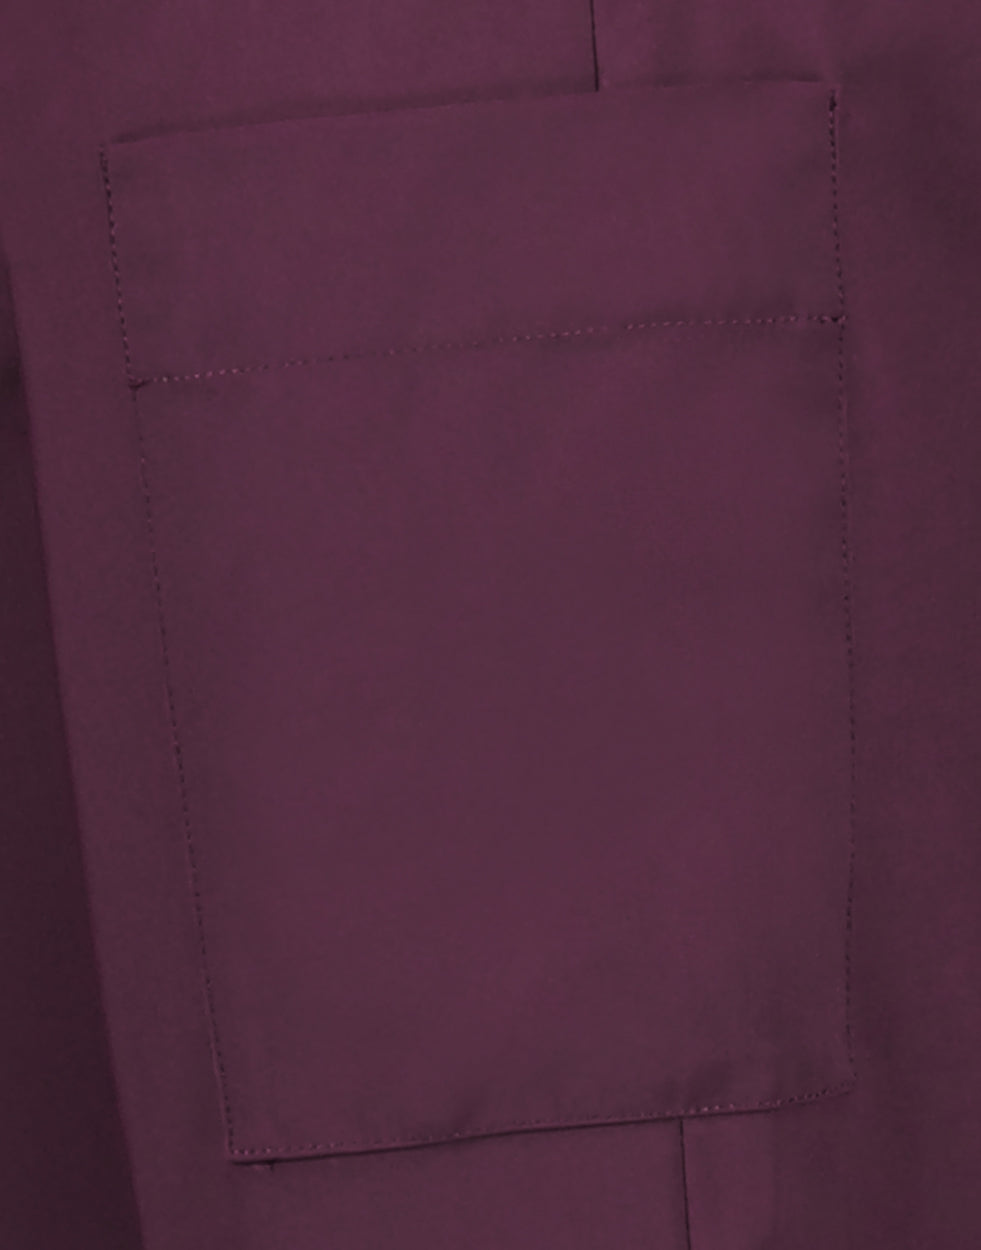 Pants Merit/P Technical Jersey | Aubergine